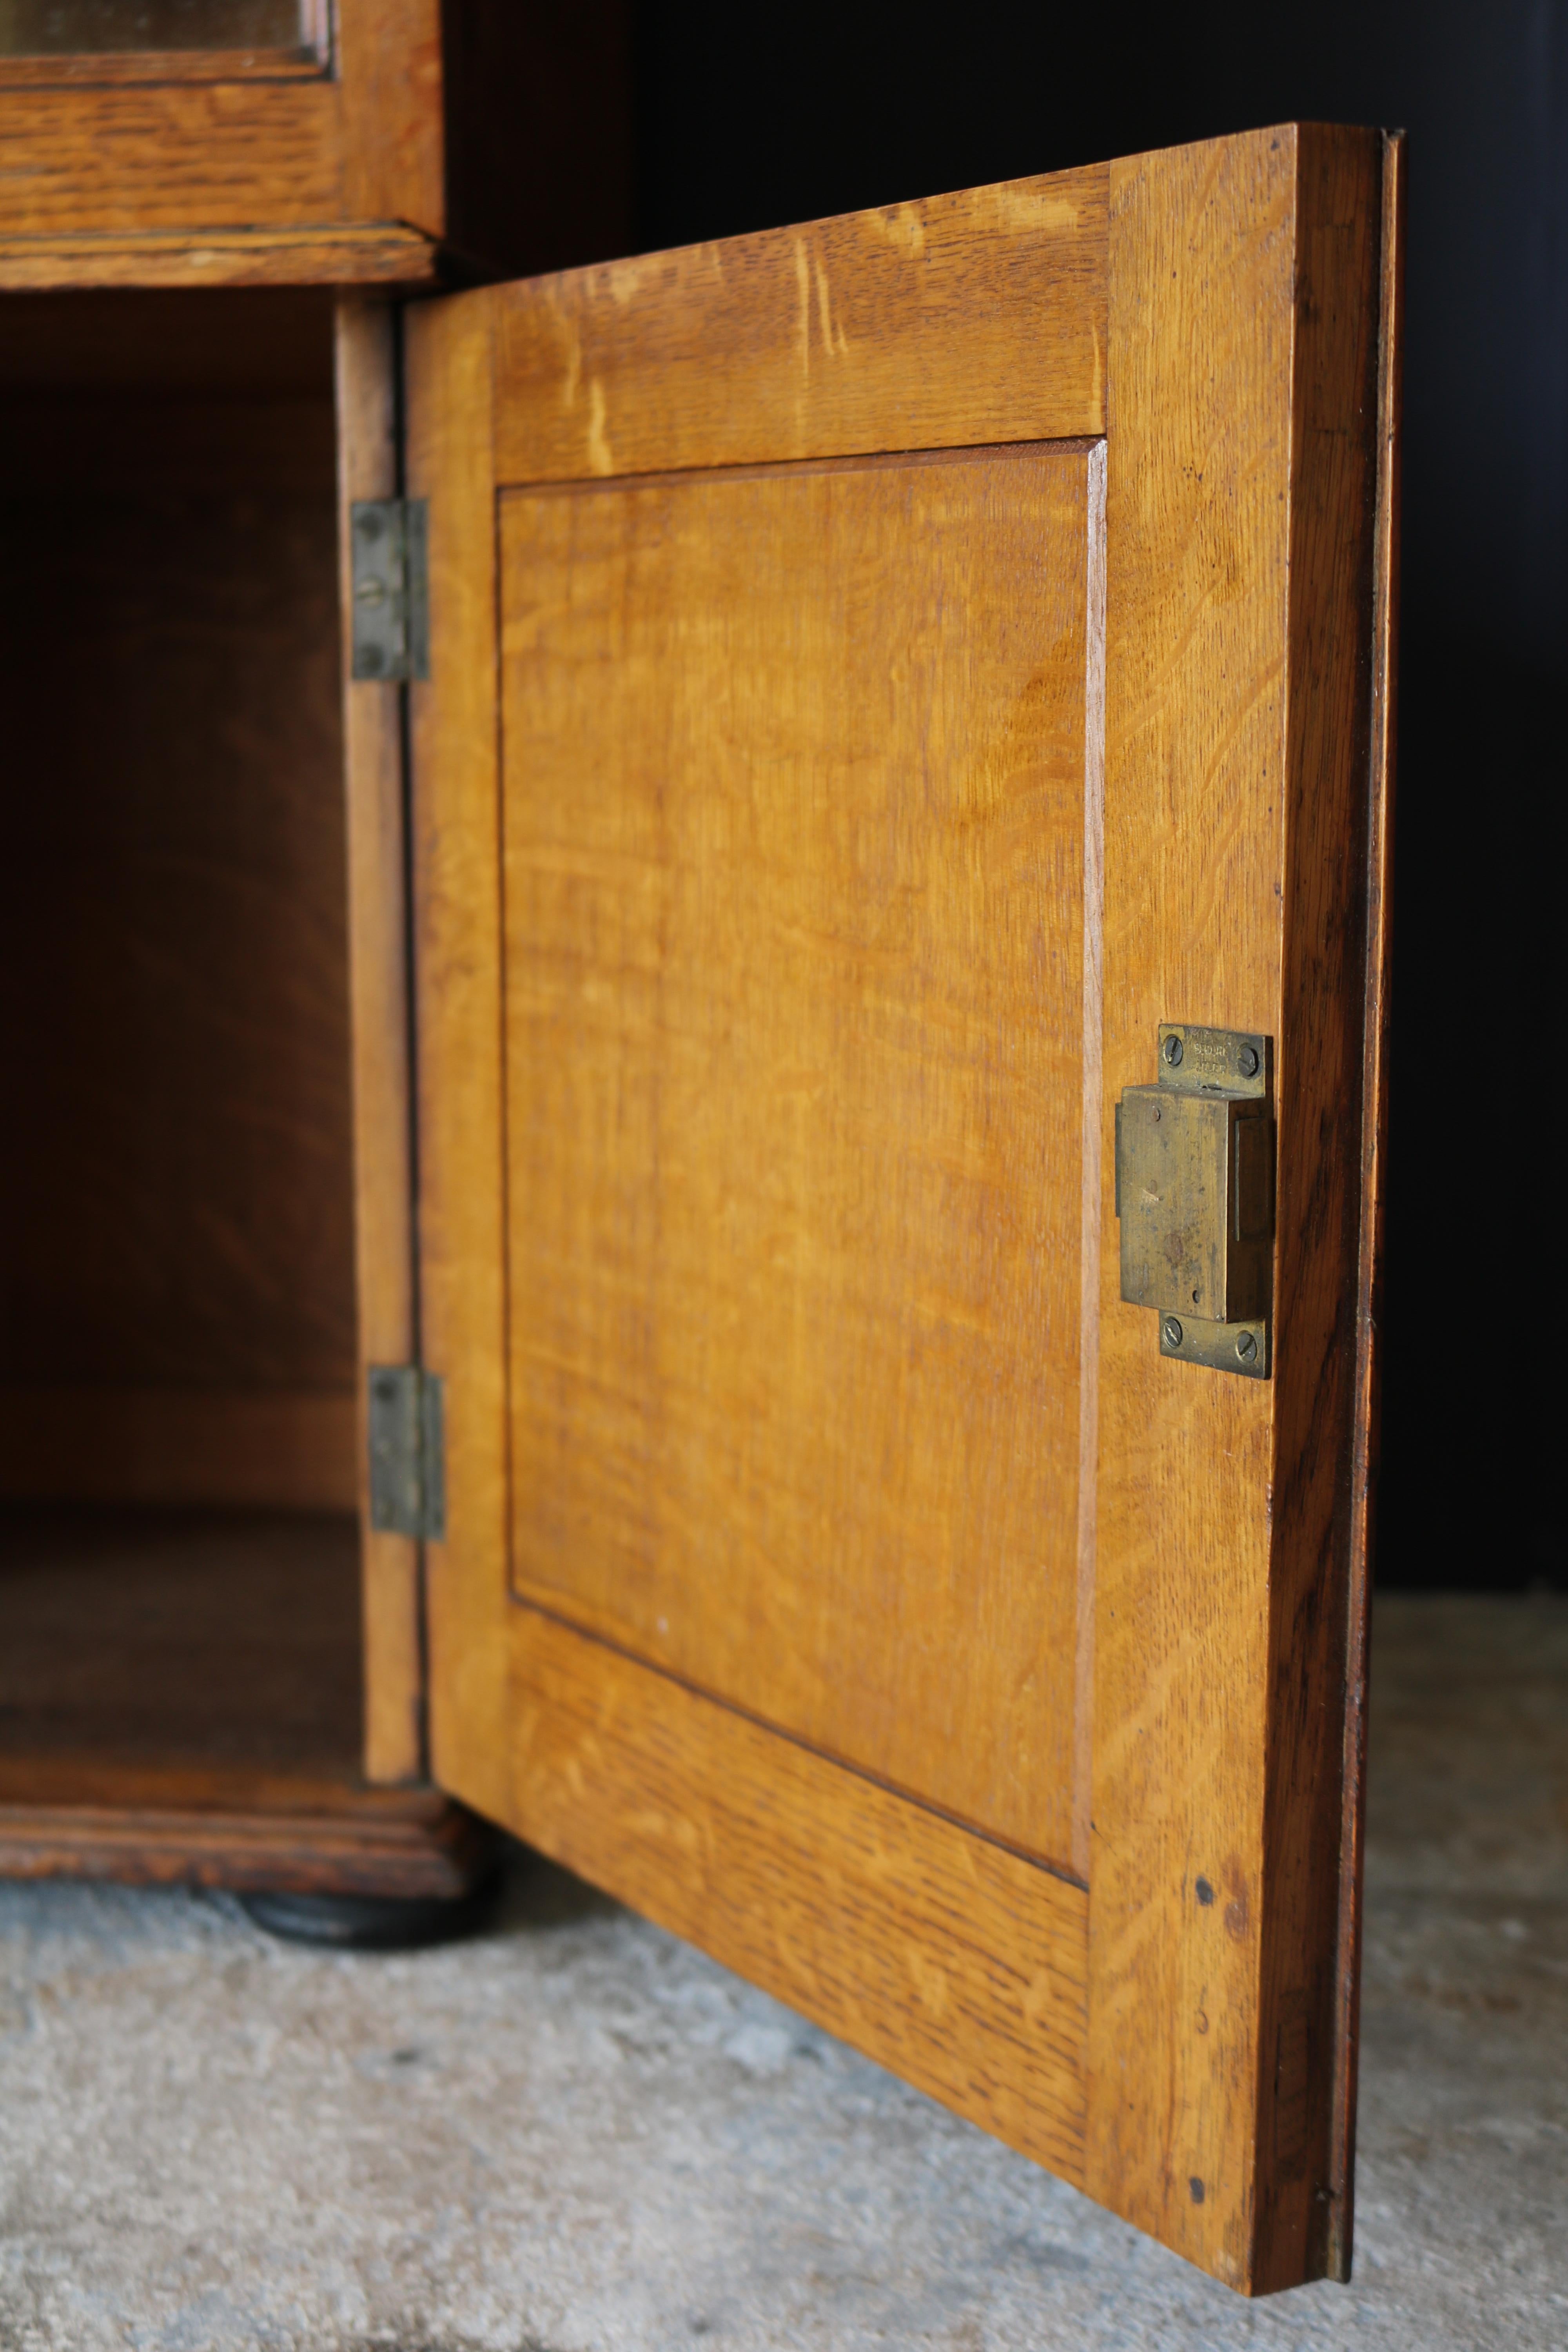 Joinery 19th Century English Dwarf Bookcase circa 1880 in Golden Oak